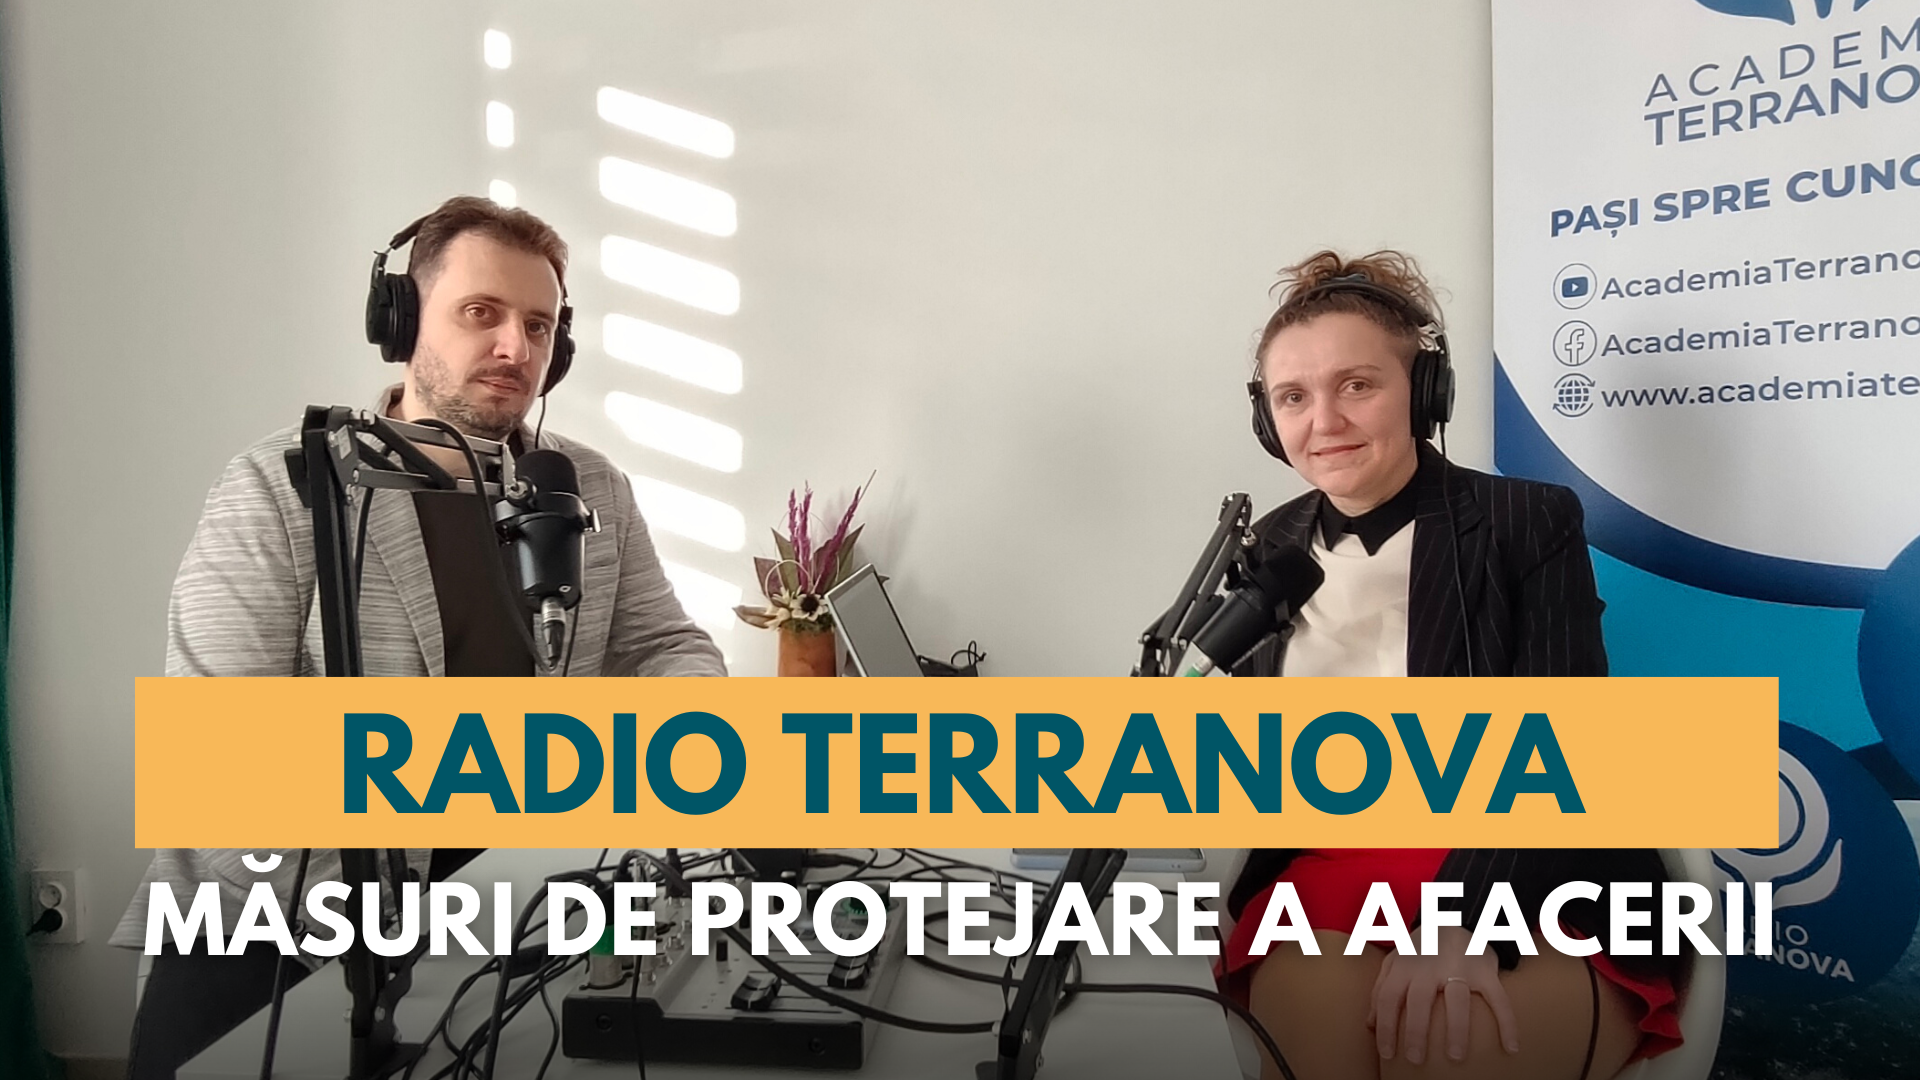 Radio terranova - Masuri de protejare a afacerii